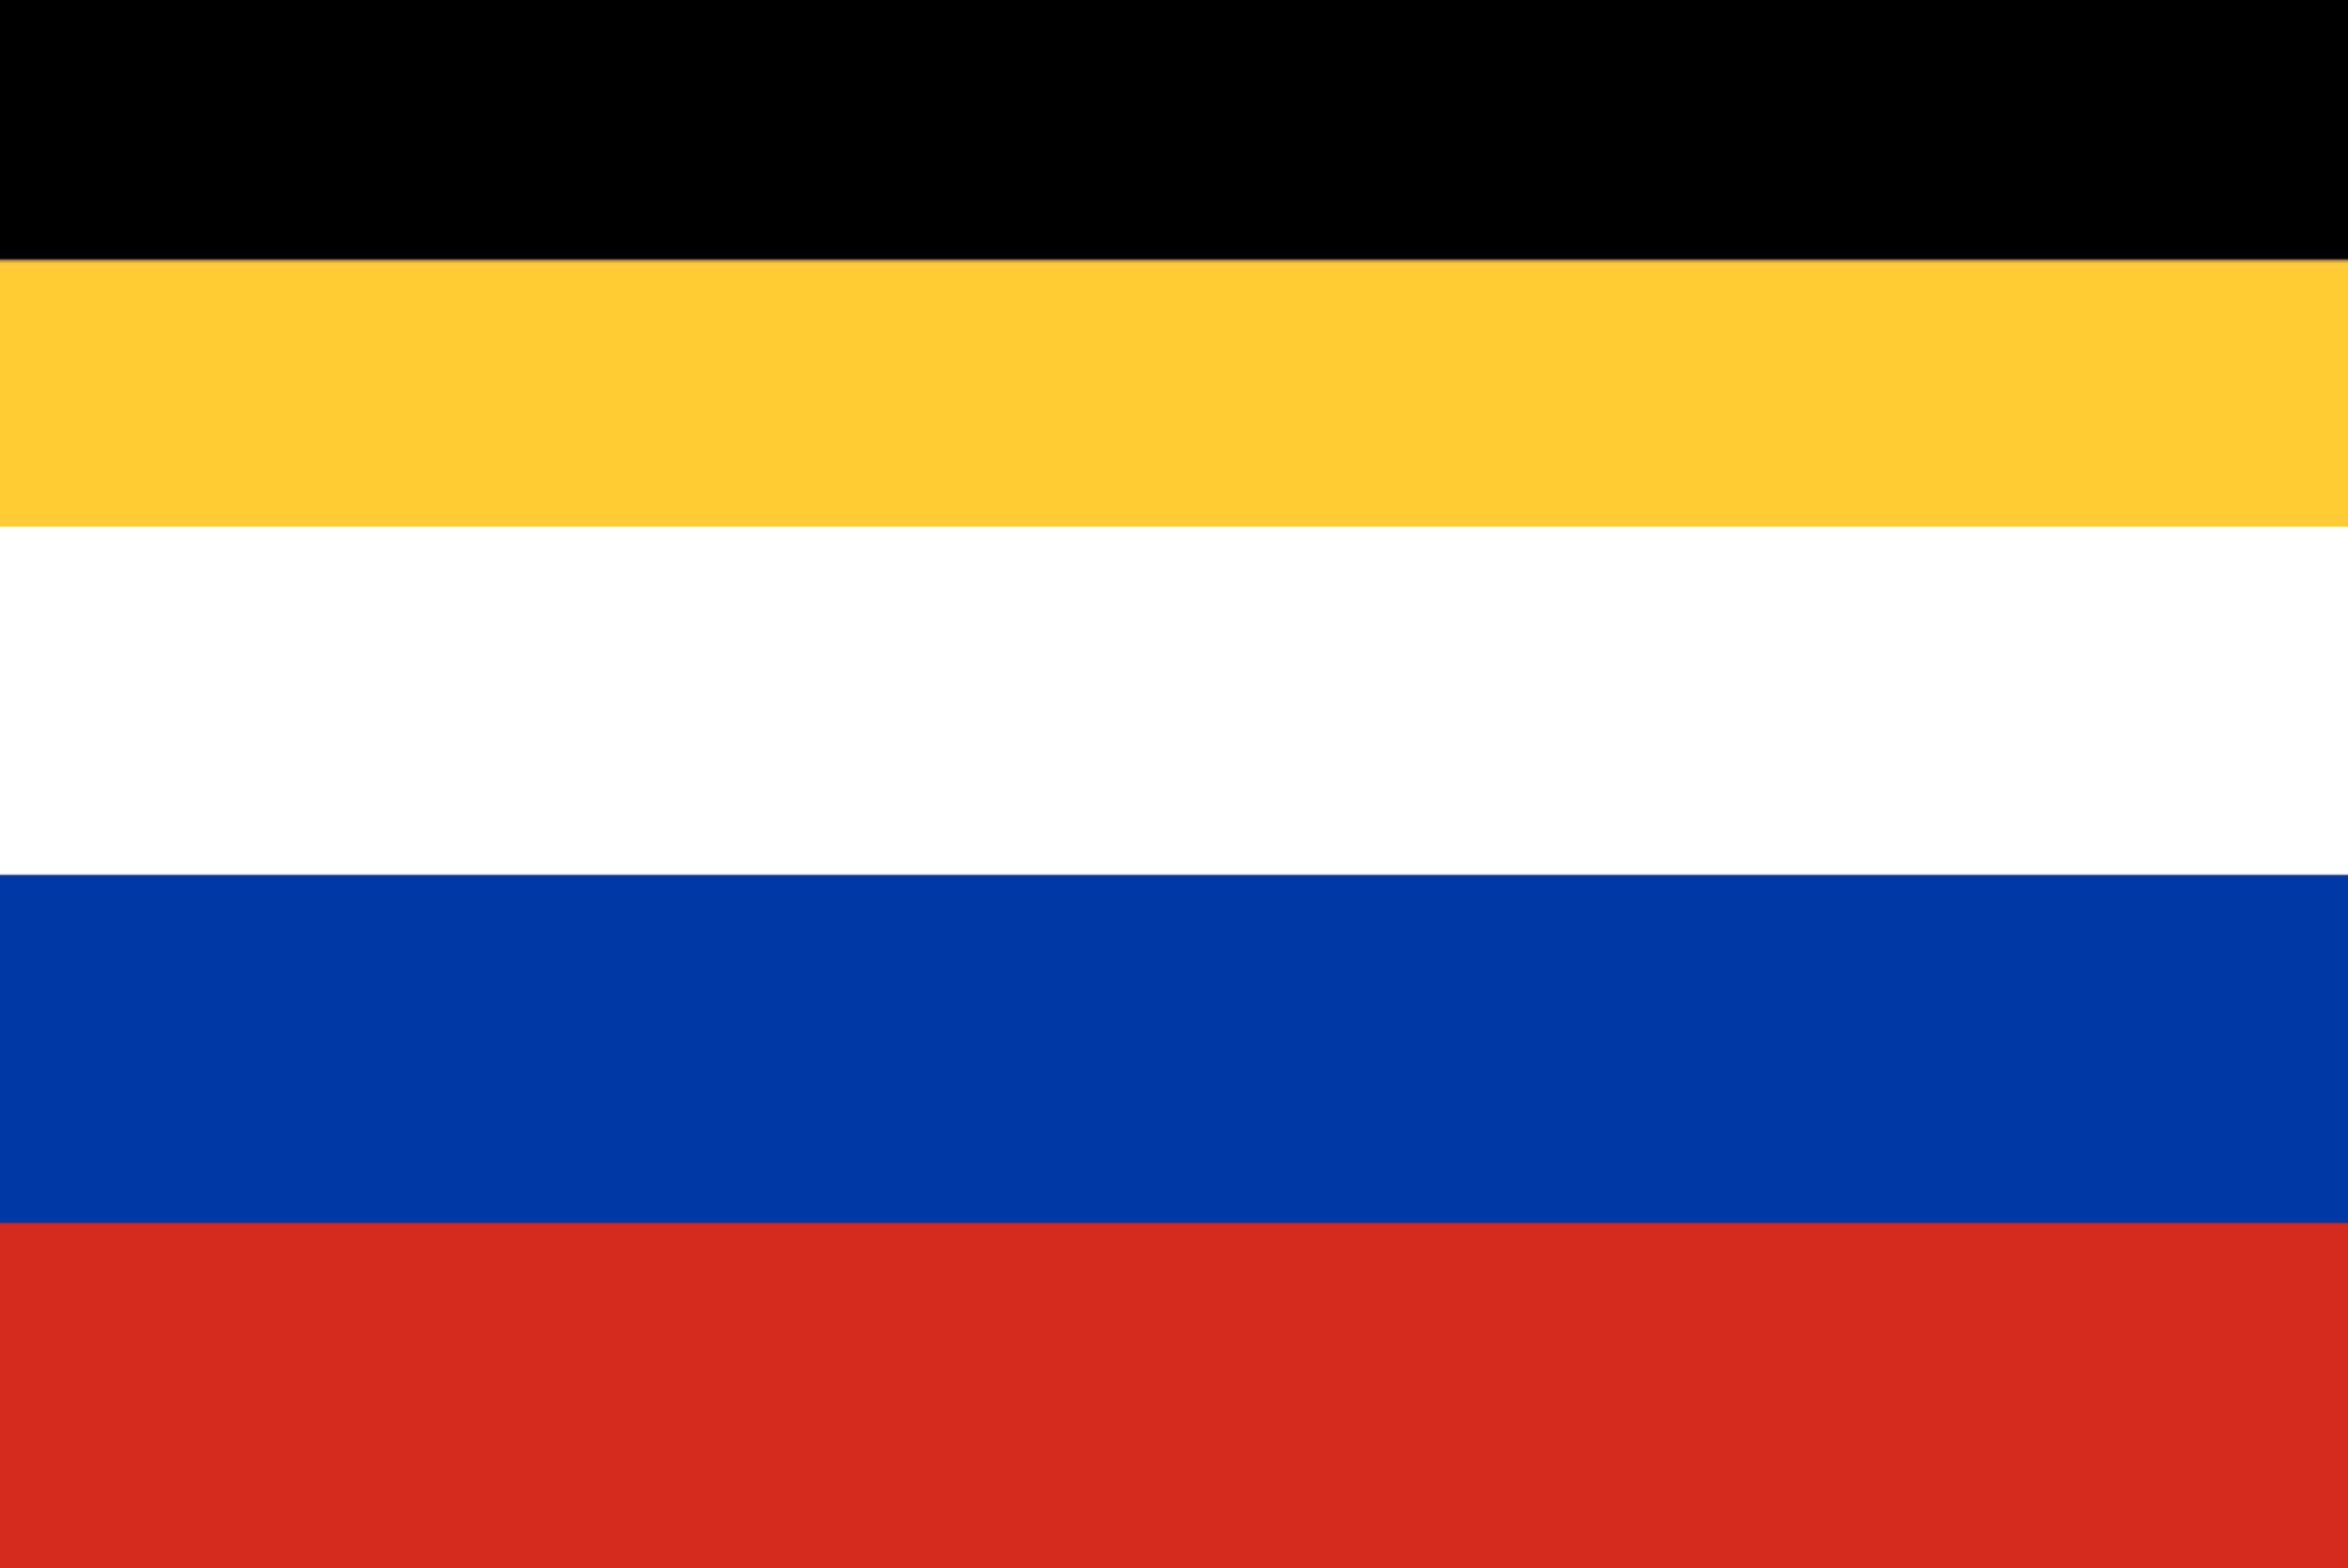 Alternate Russian Flag by riccflash on DeviantArt